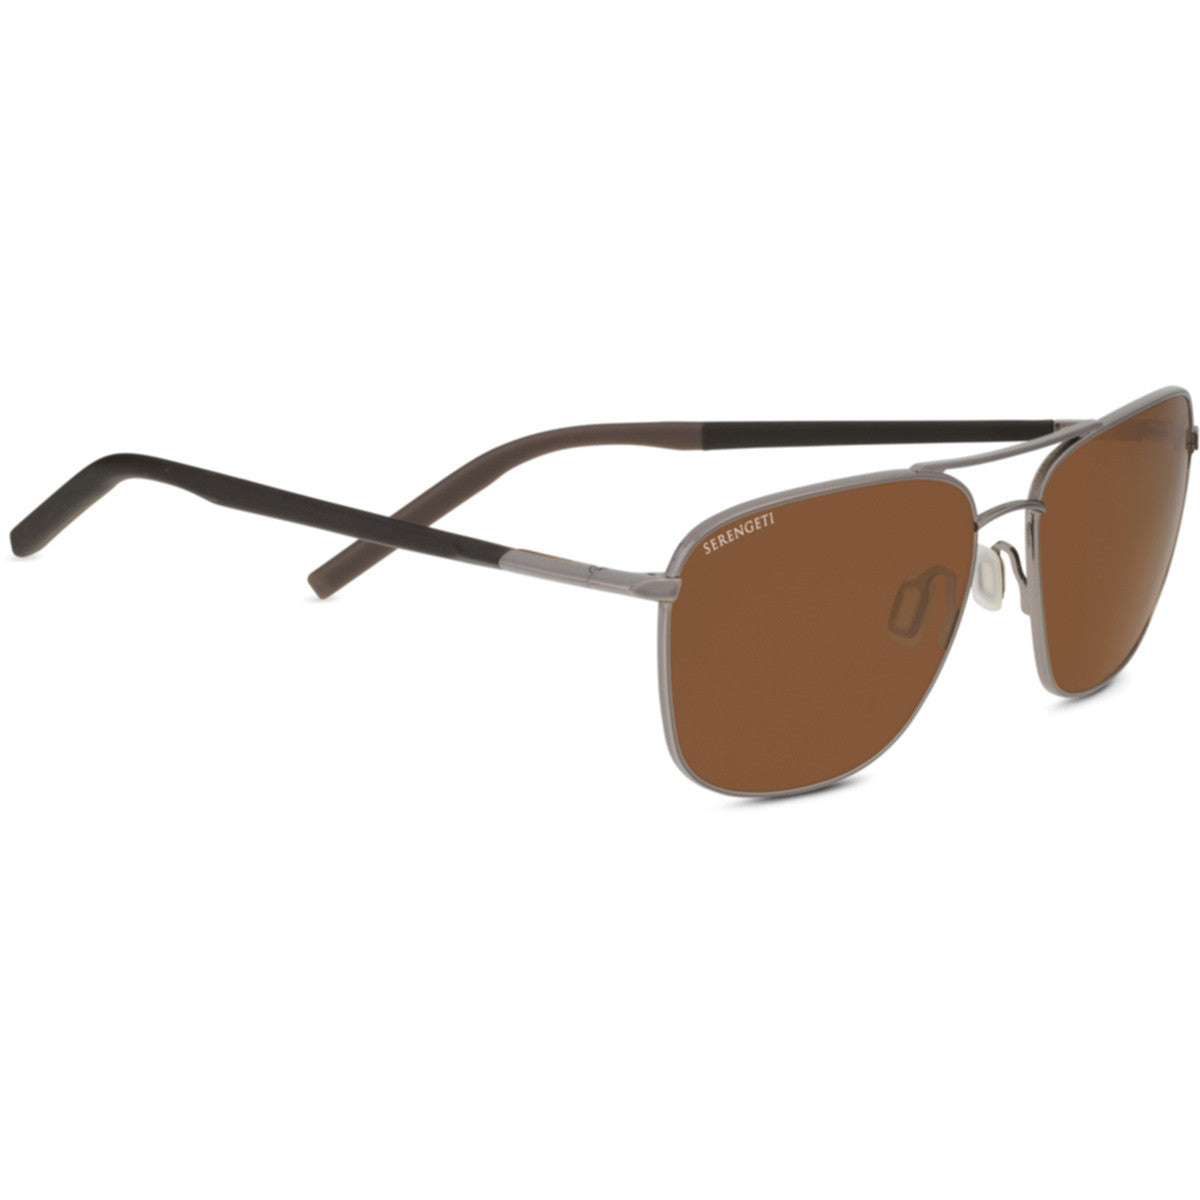 Serengeti Spello Sunglasses  Gunmetal Shiny Medium, Large